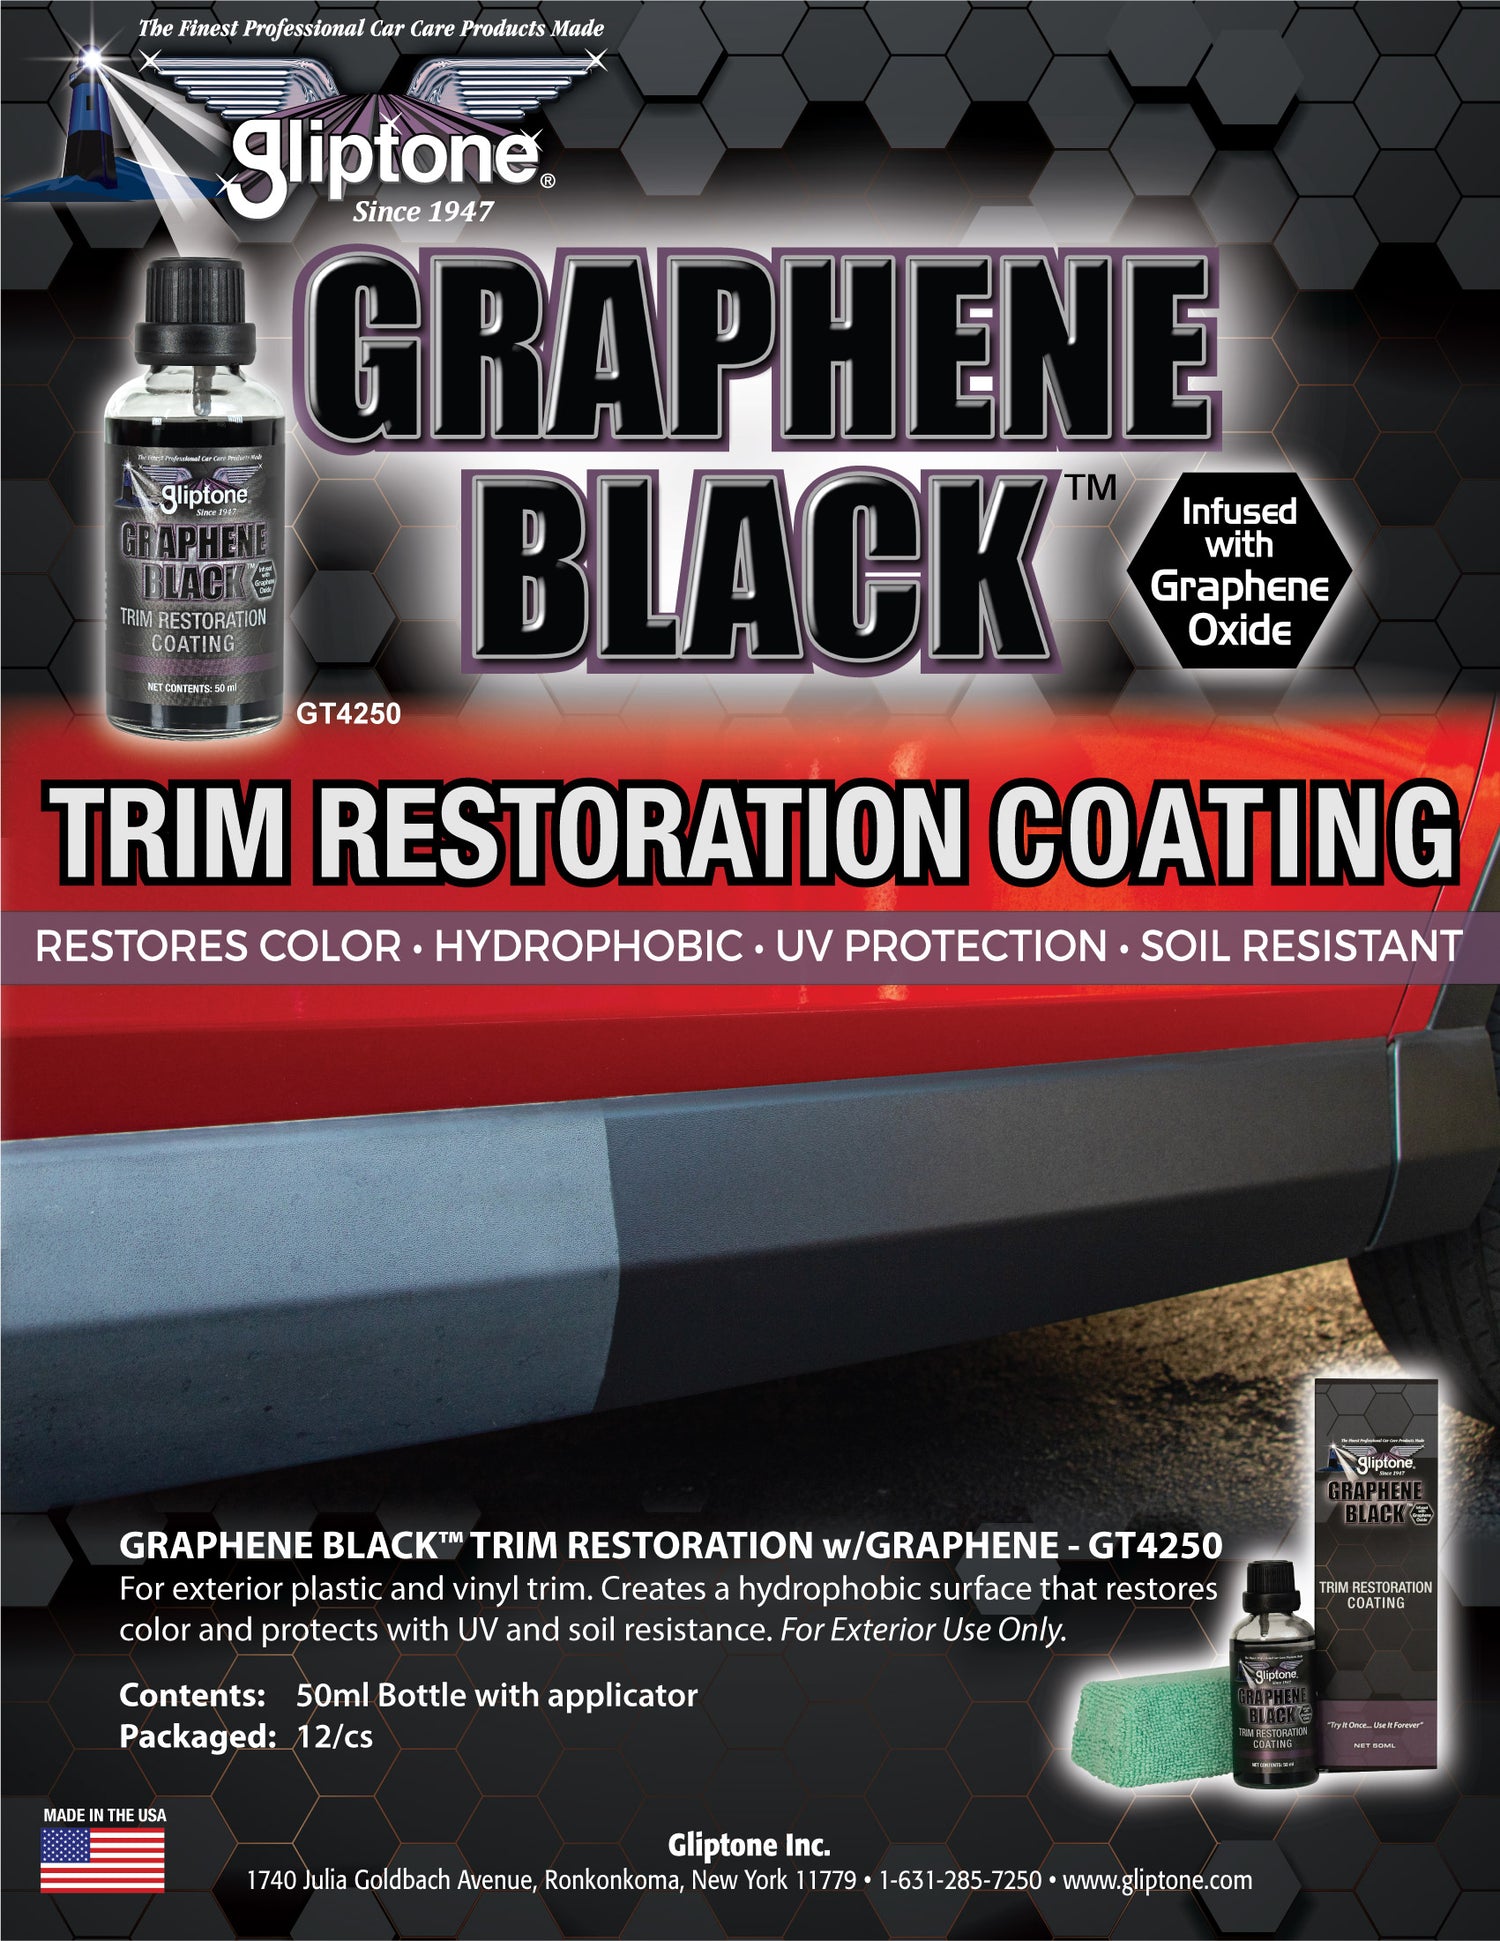 NEW Graphene Black for exterior trim restoration.  Long Term Solution!!!